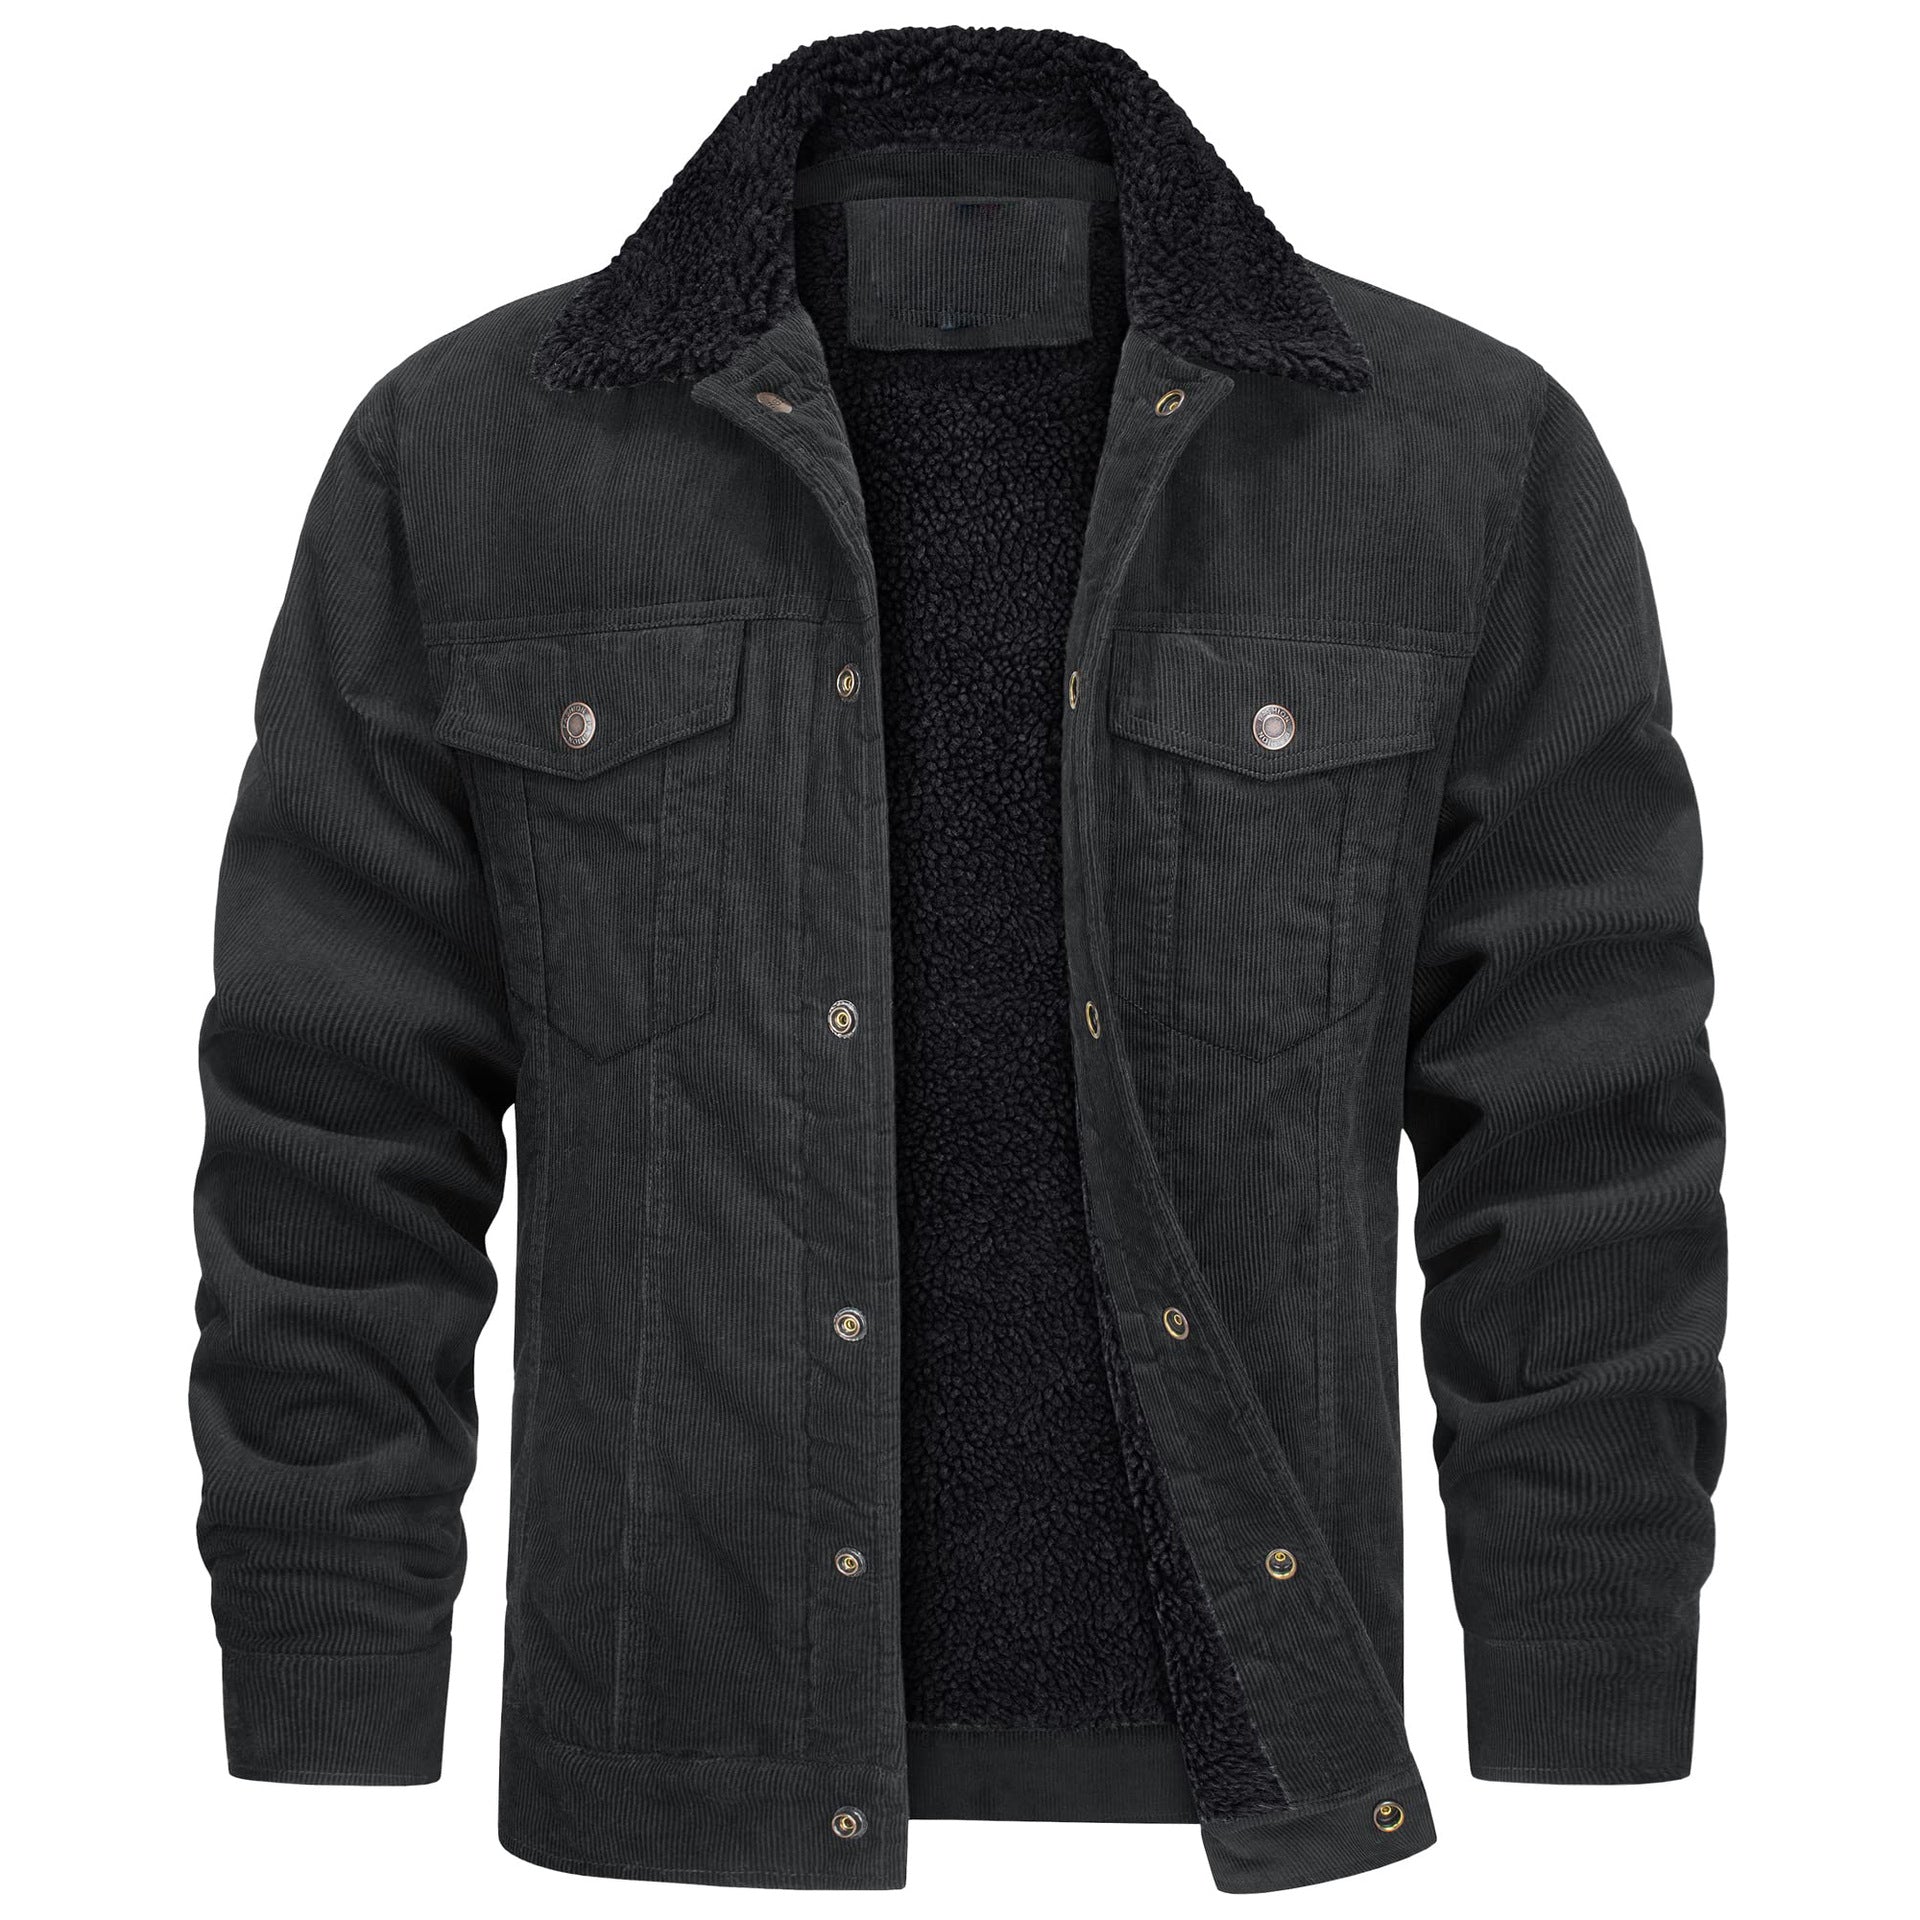 Casual Winter Long Sleeves Velvet Jacket Coats for Men-Coats & Jackets-Black-1-S-Free Shipping Leatheretro